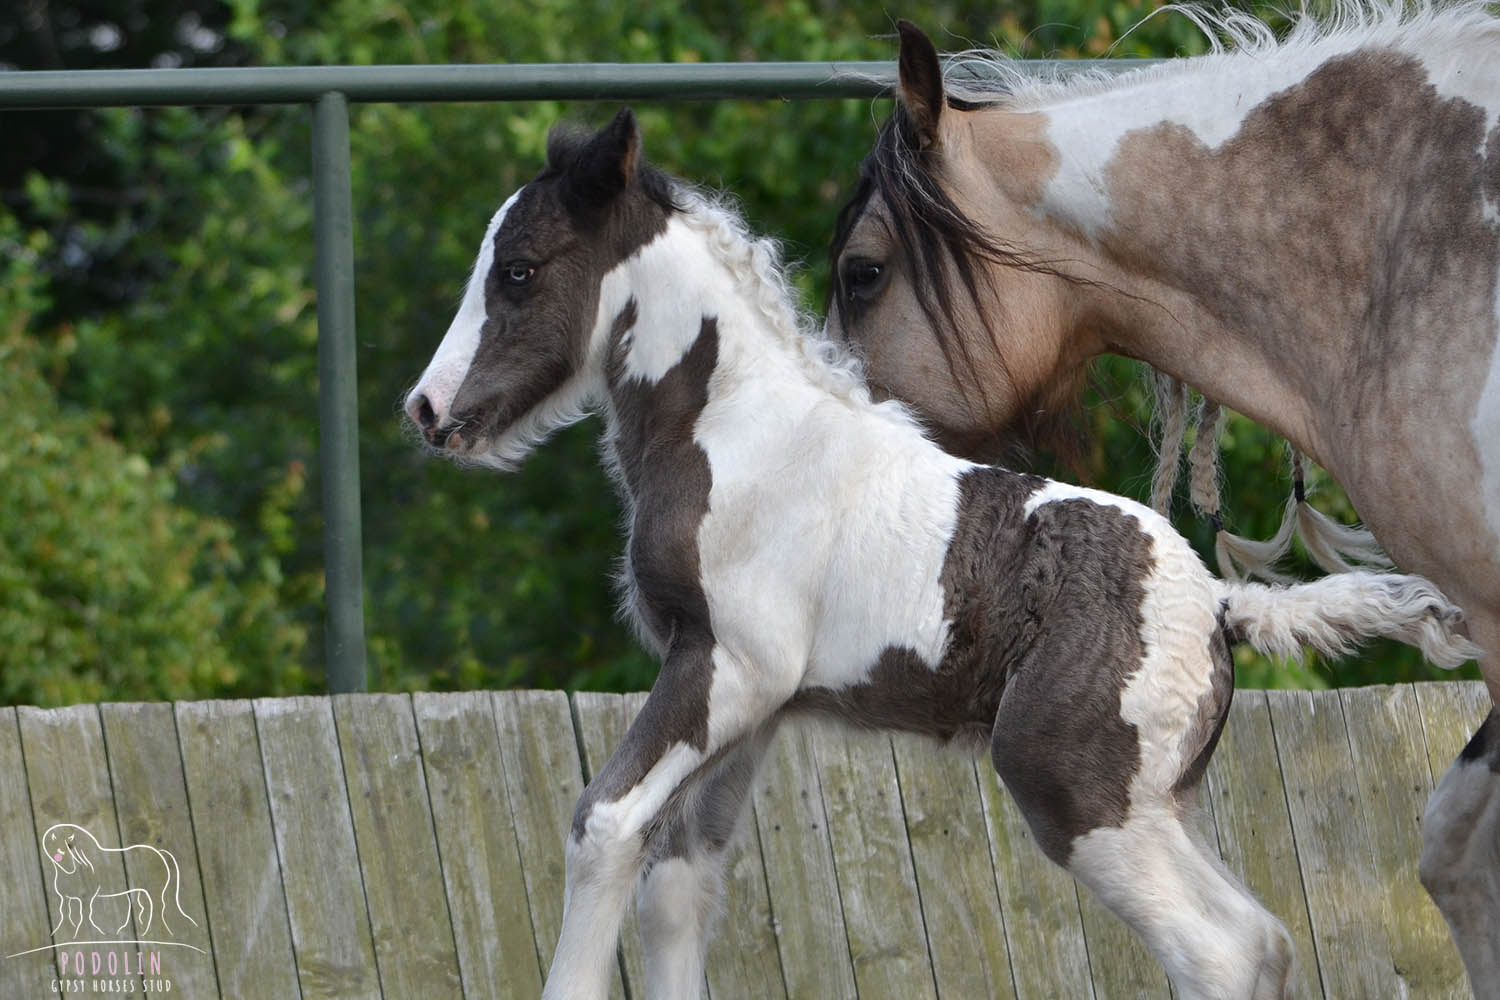 Podolin Dainty Sapphire - Black and White Gypsy Cob Foal